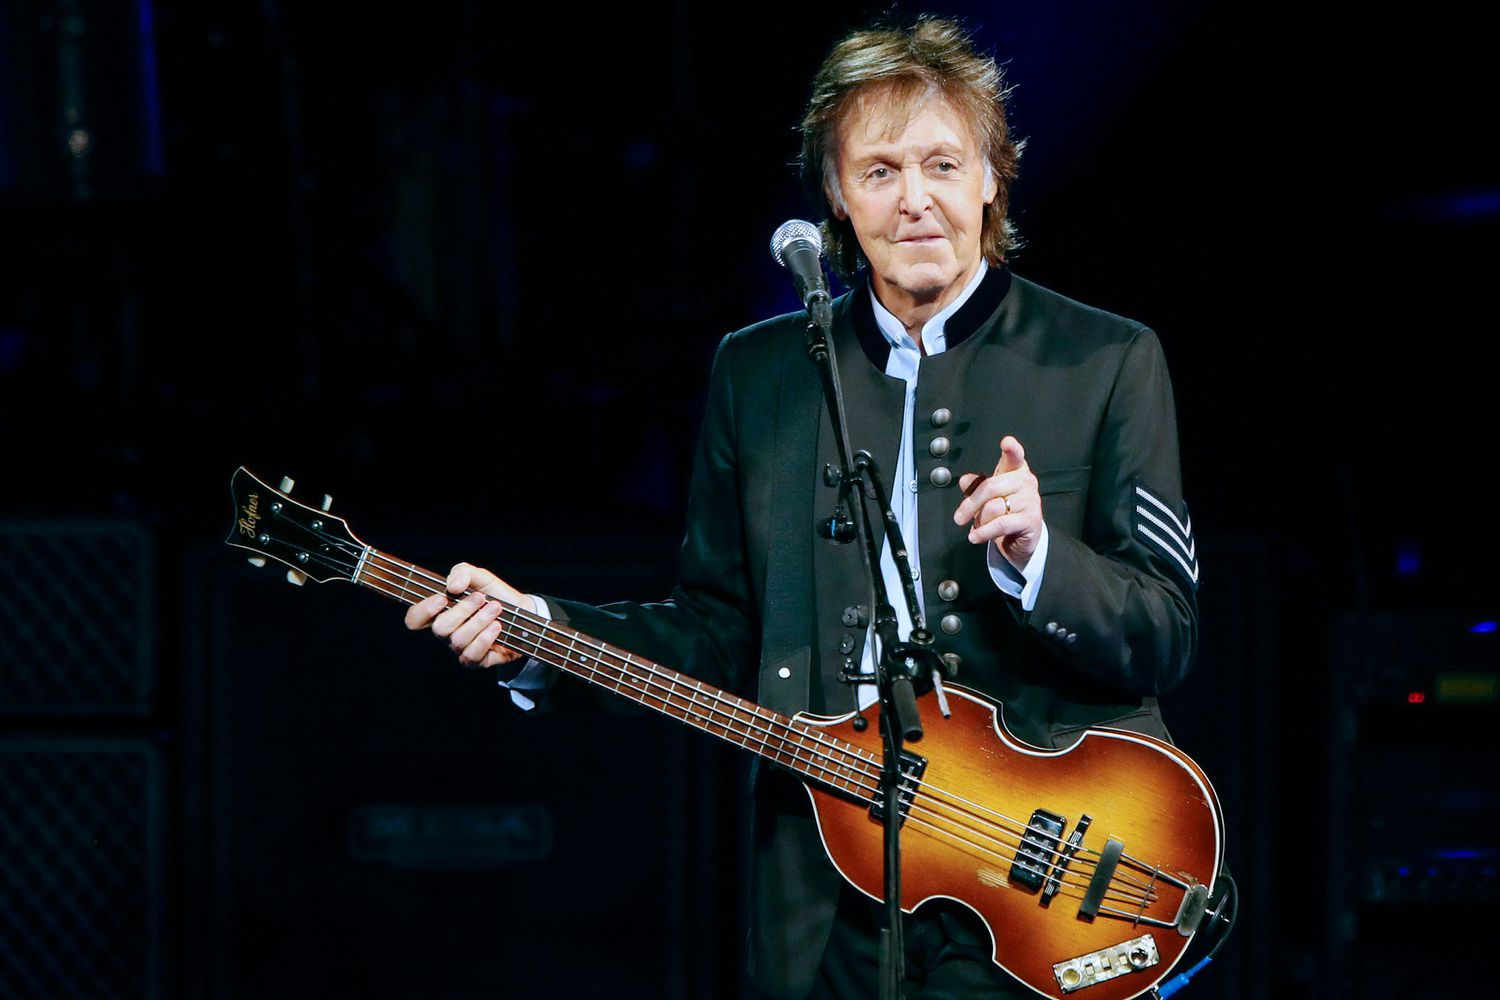 The 25 best songs of Paul McCartney